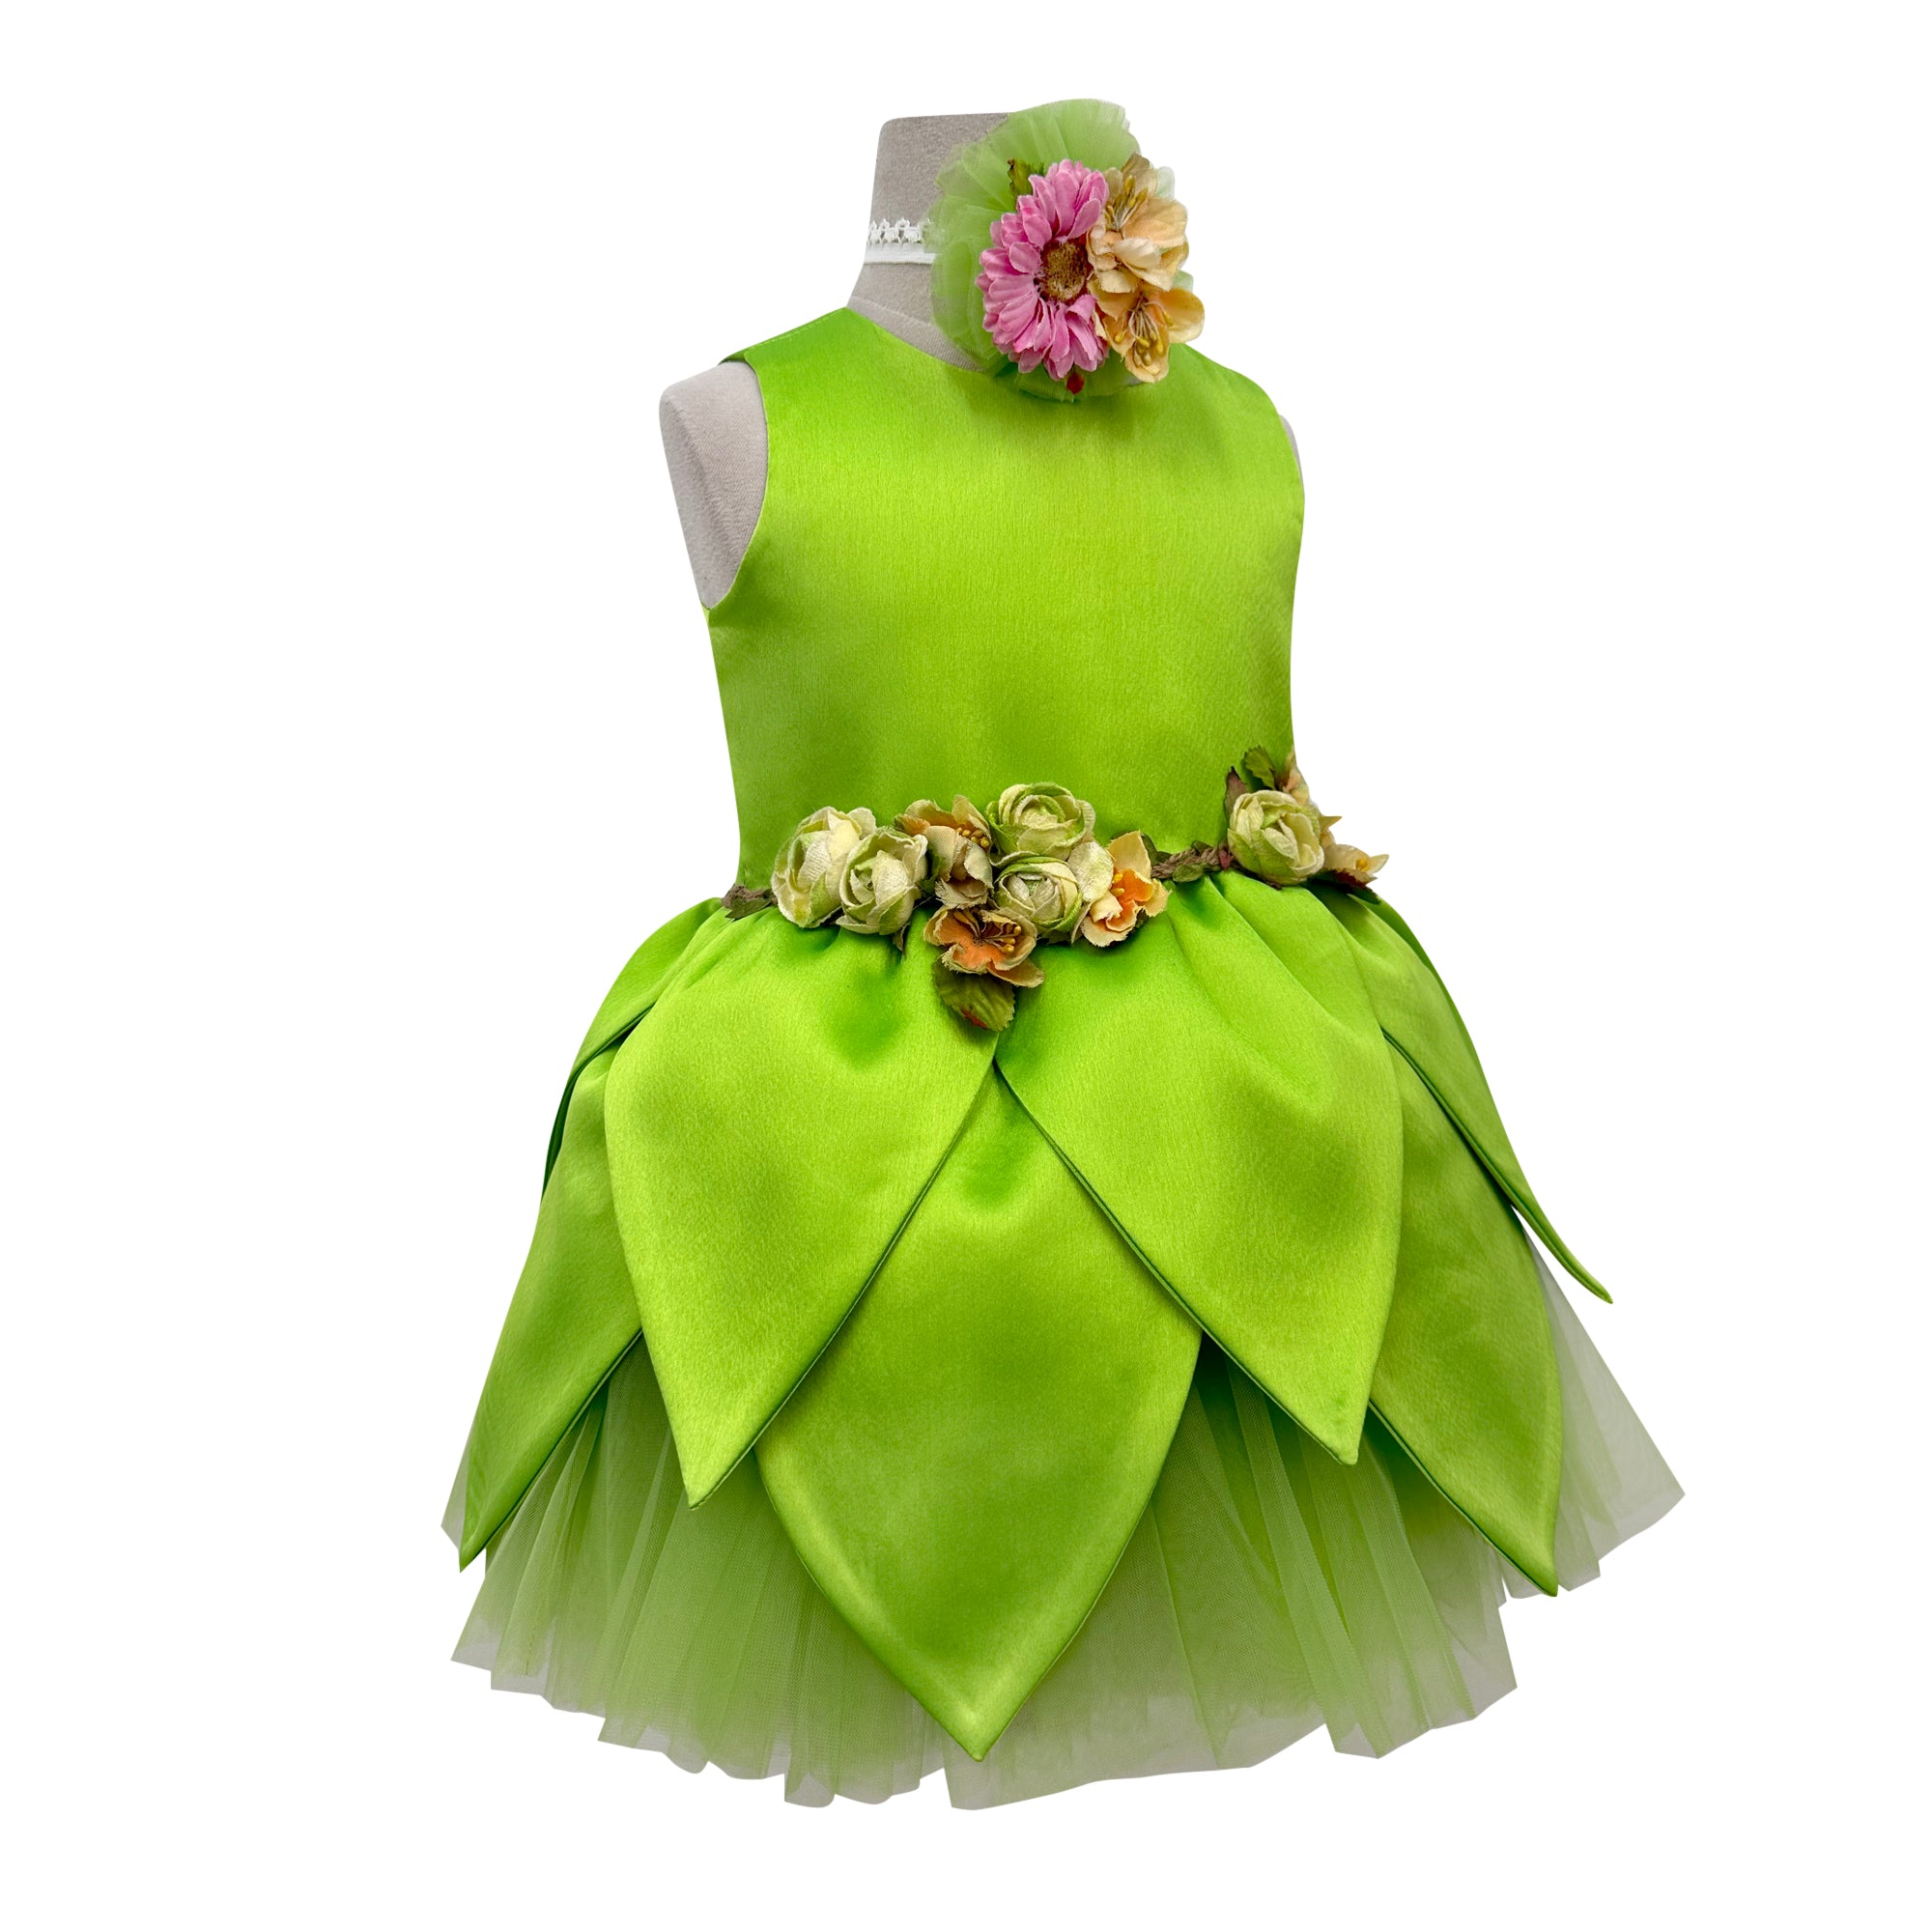 The Tinkerbell Dress